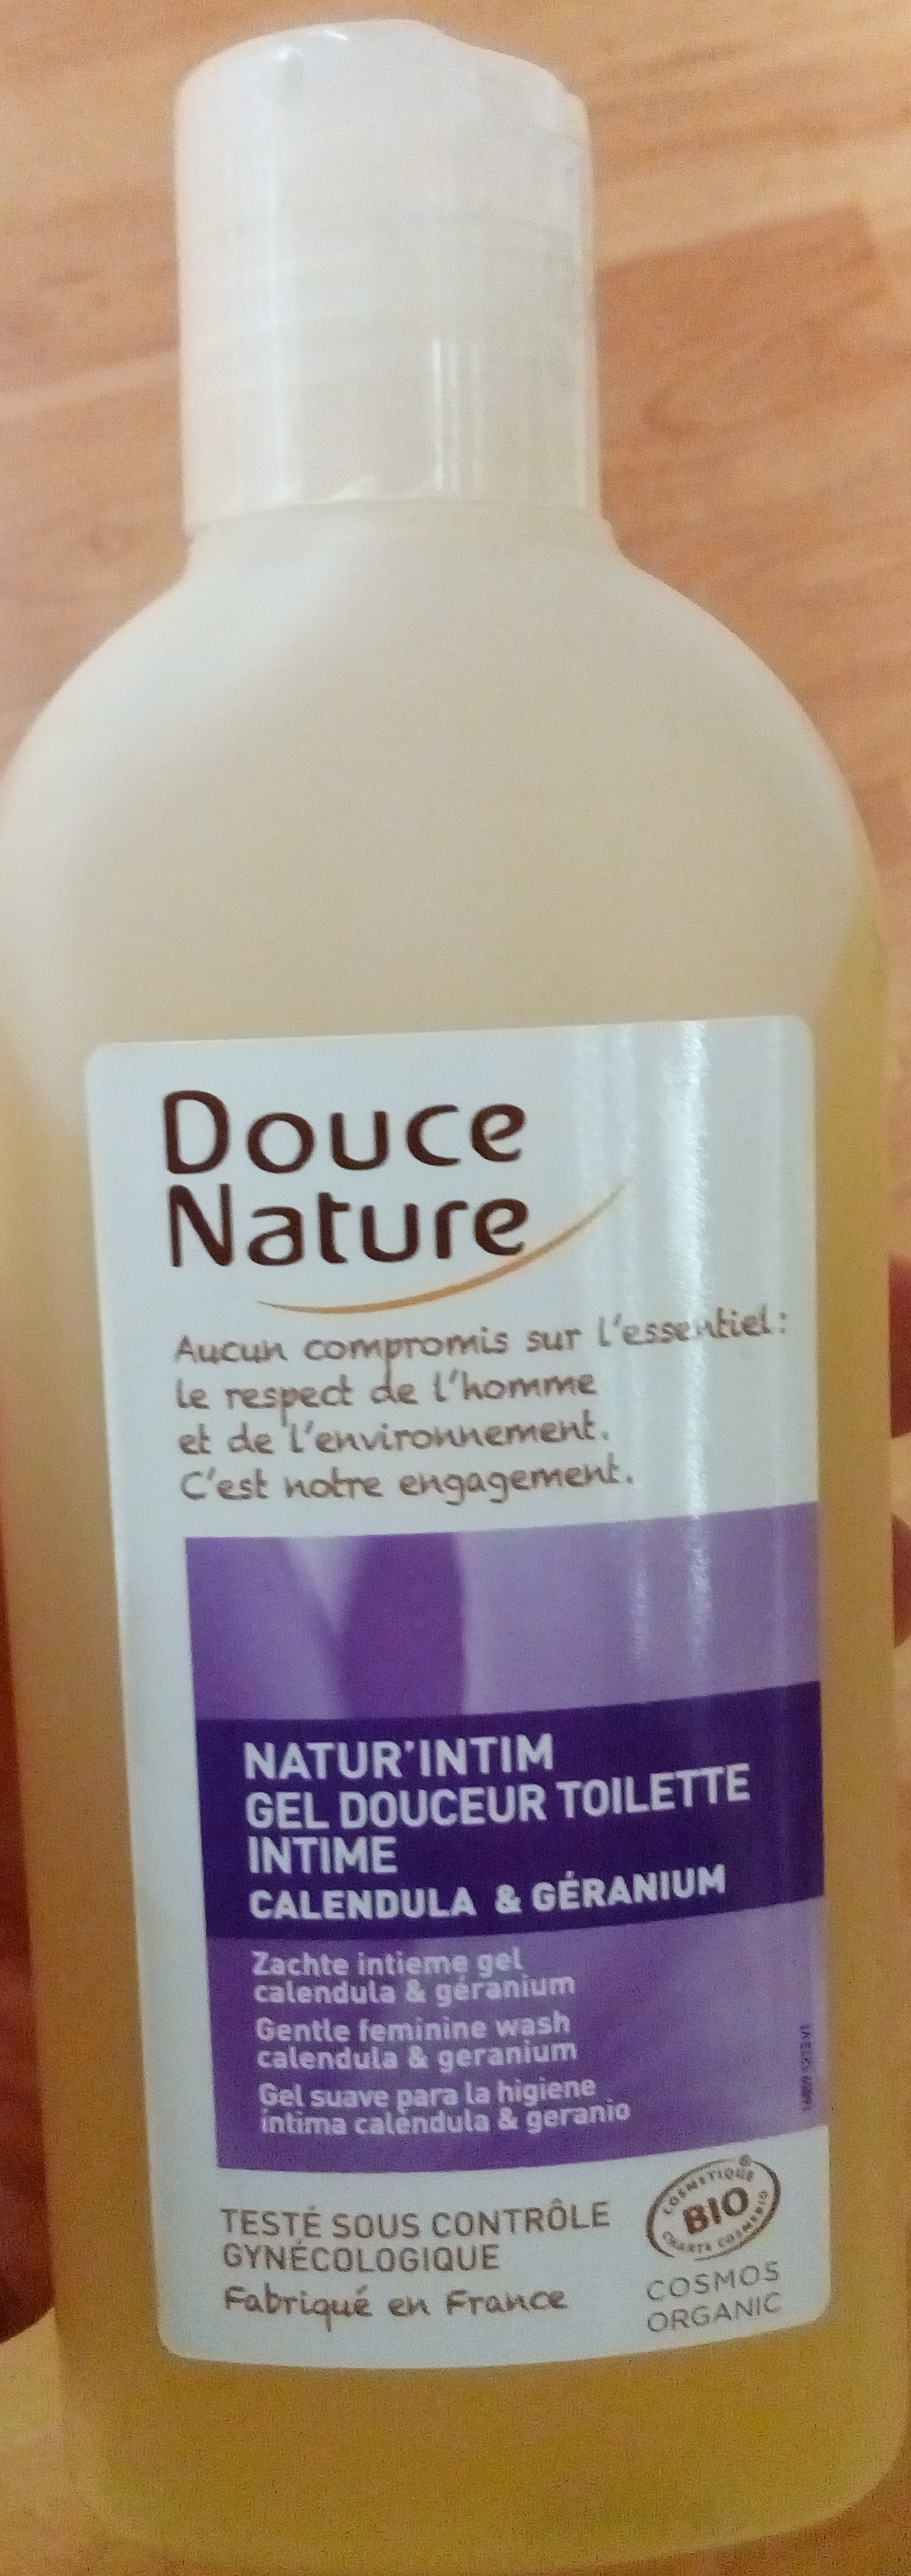 Natur'Intim Gel douceur Toilette Intime - 製品 - fr